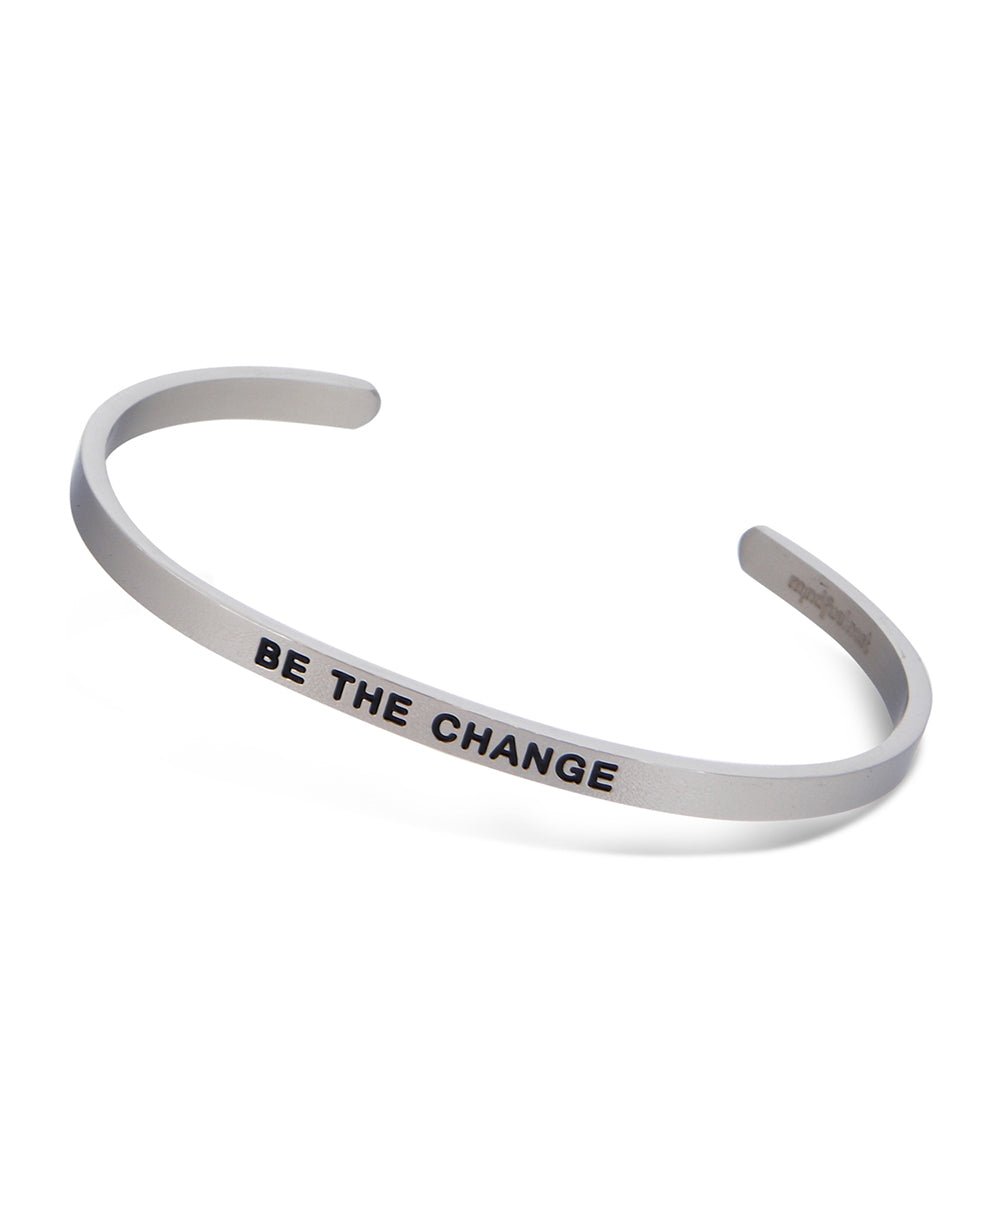 Engraved Metal Cuff Bracelet, Be The Change - Bracelets